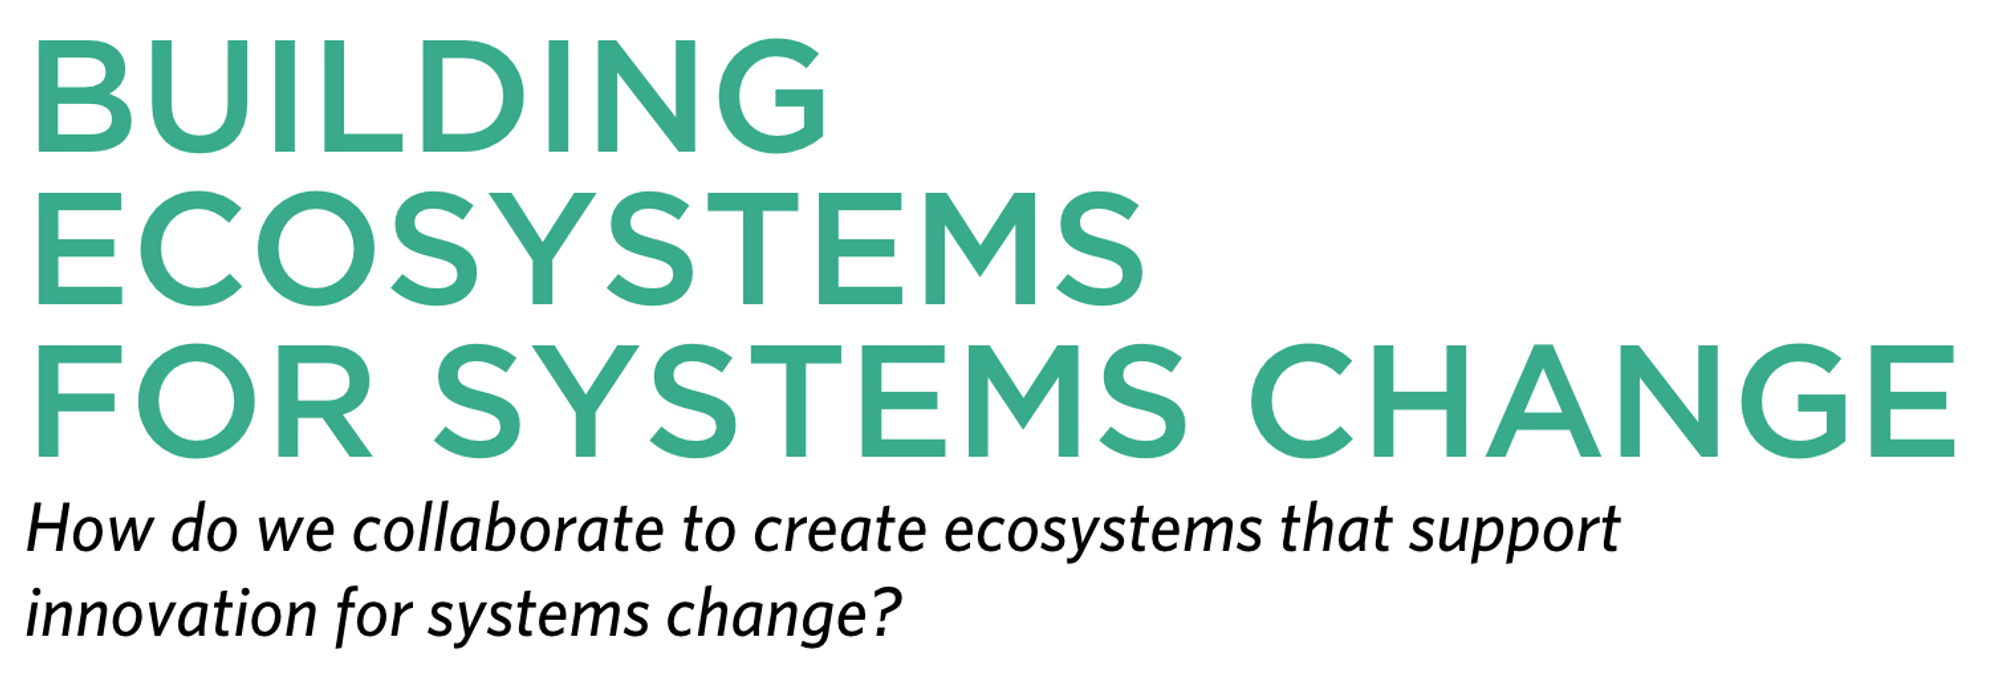 building-ecosystems